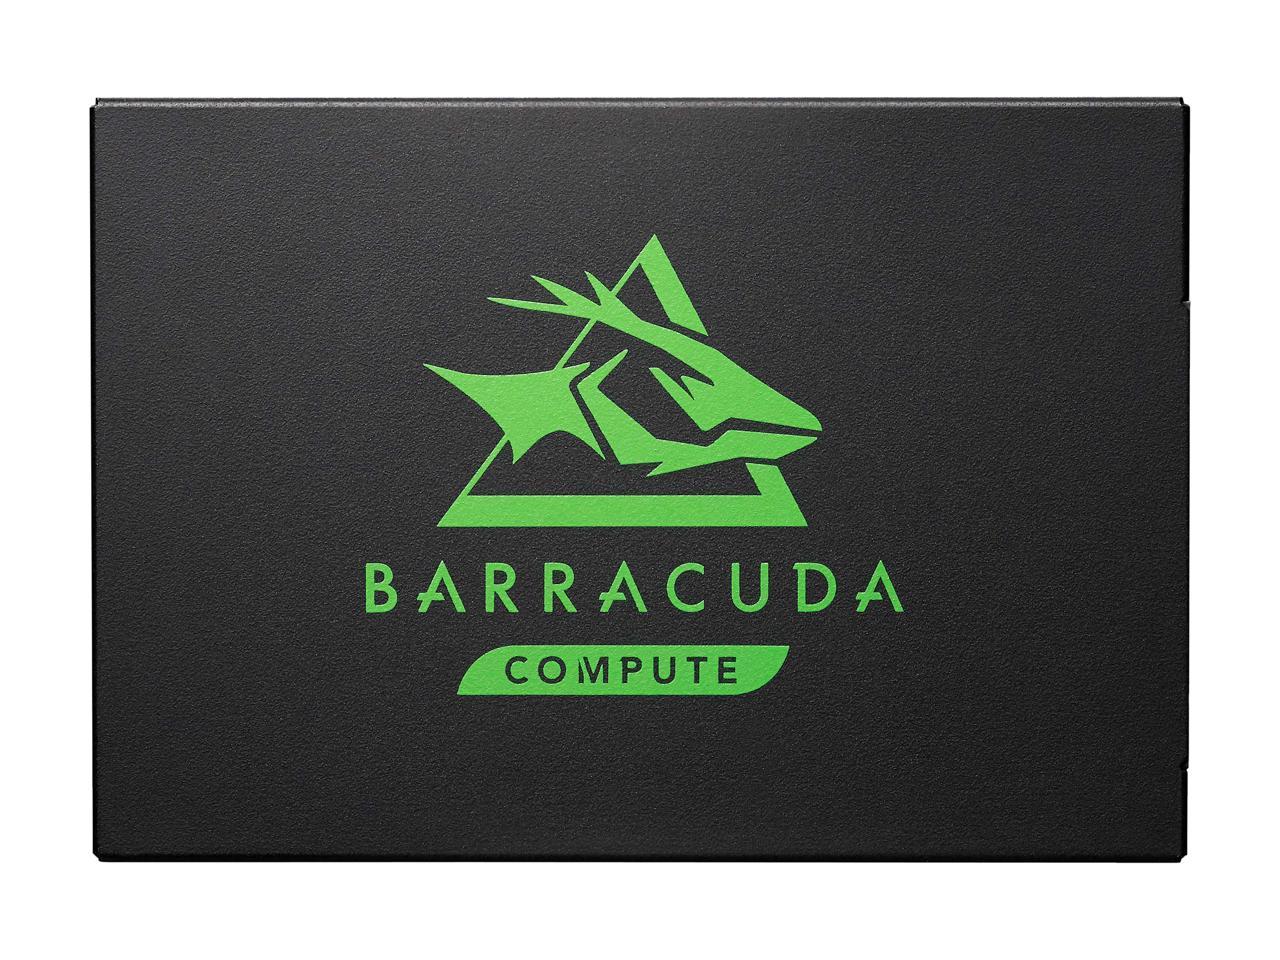 Seagate Barracuda 120 SSD 250GB Internal Solid State Drive - 2.5 Inch SATA 6GB/s for Computer Desktop PC Laptop (ZA250CM1A003)